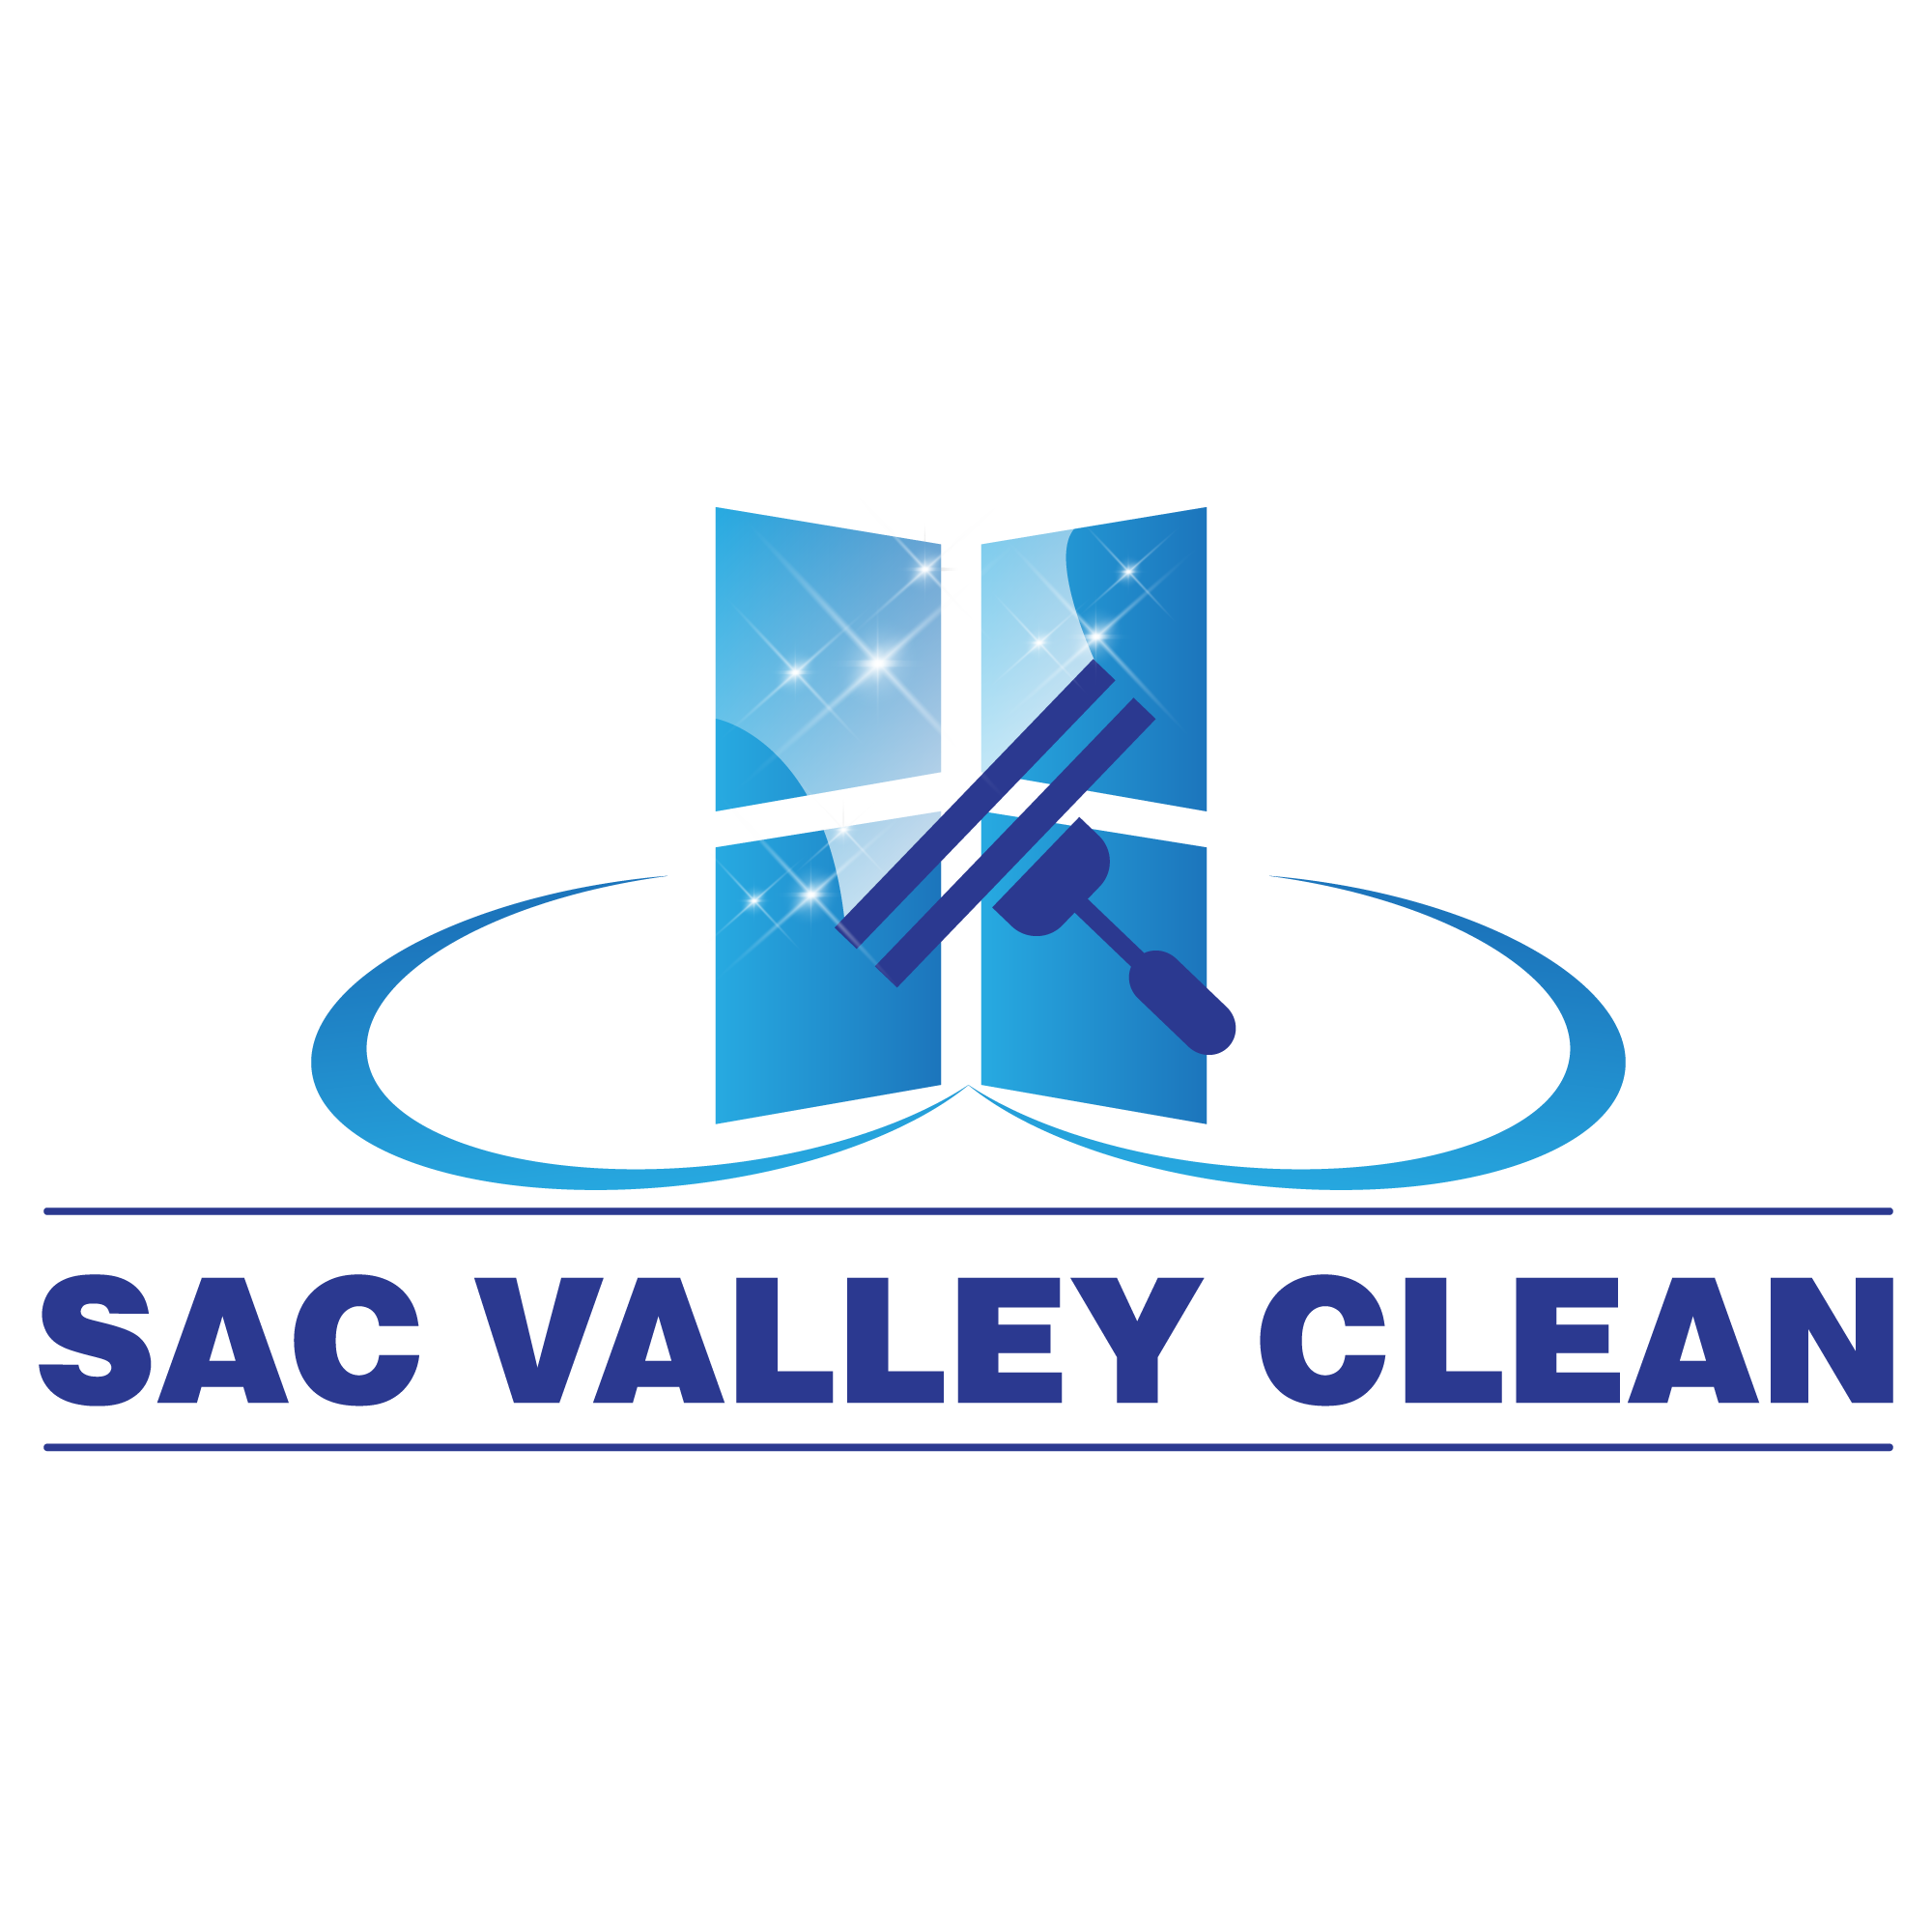 Sac Valley clean